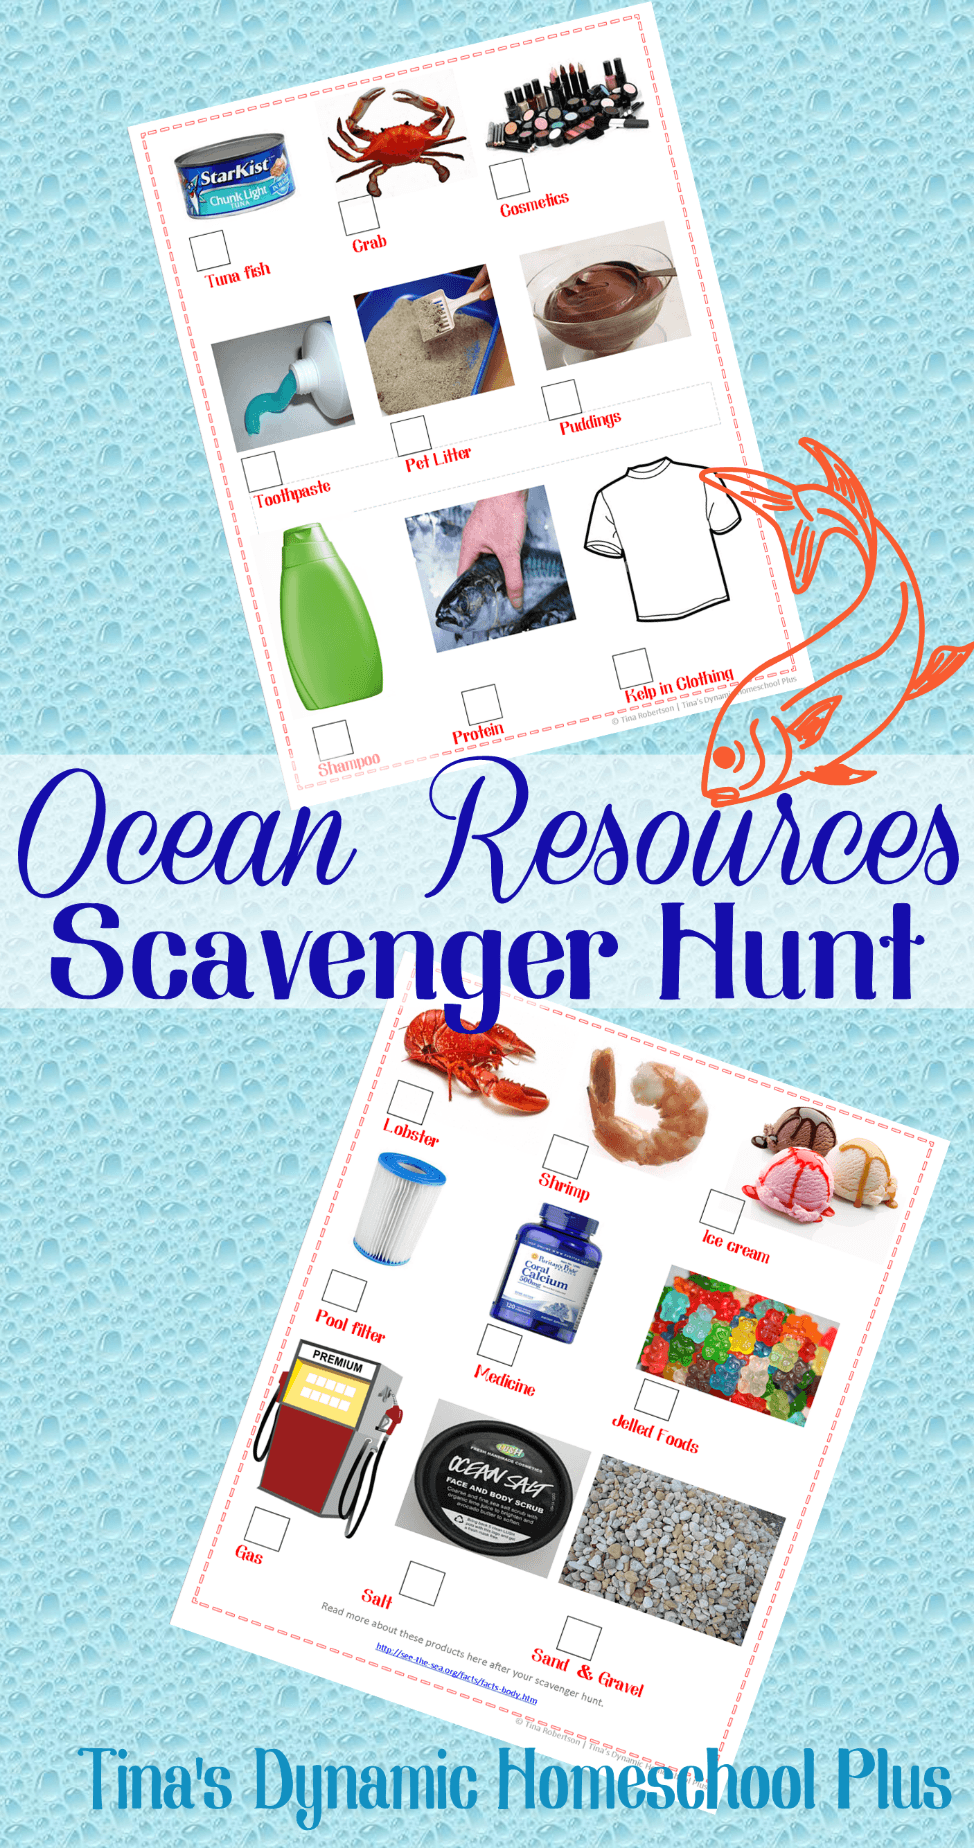 Ocean Resources Scavenger Hunt Collage